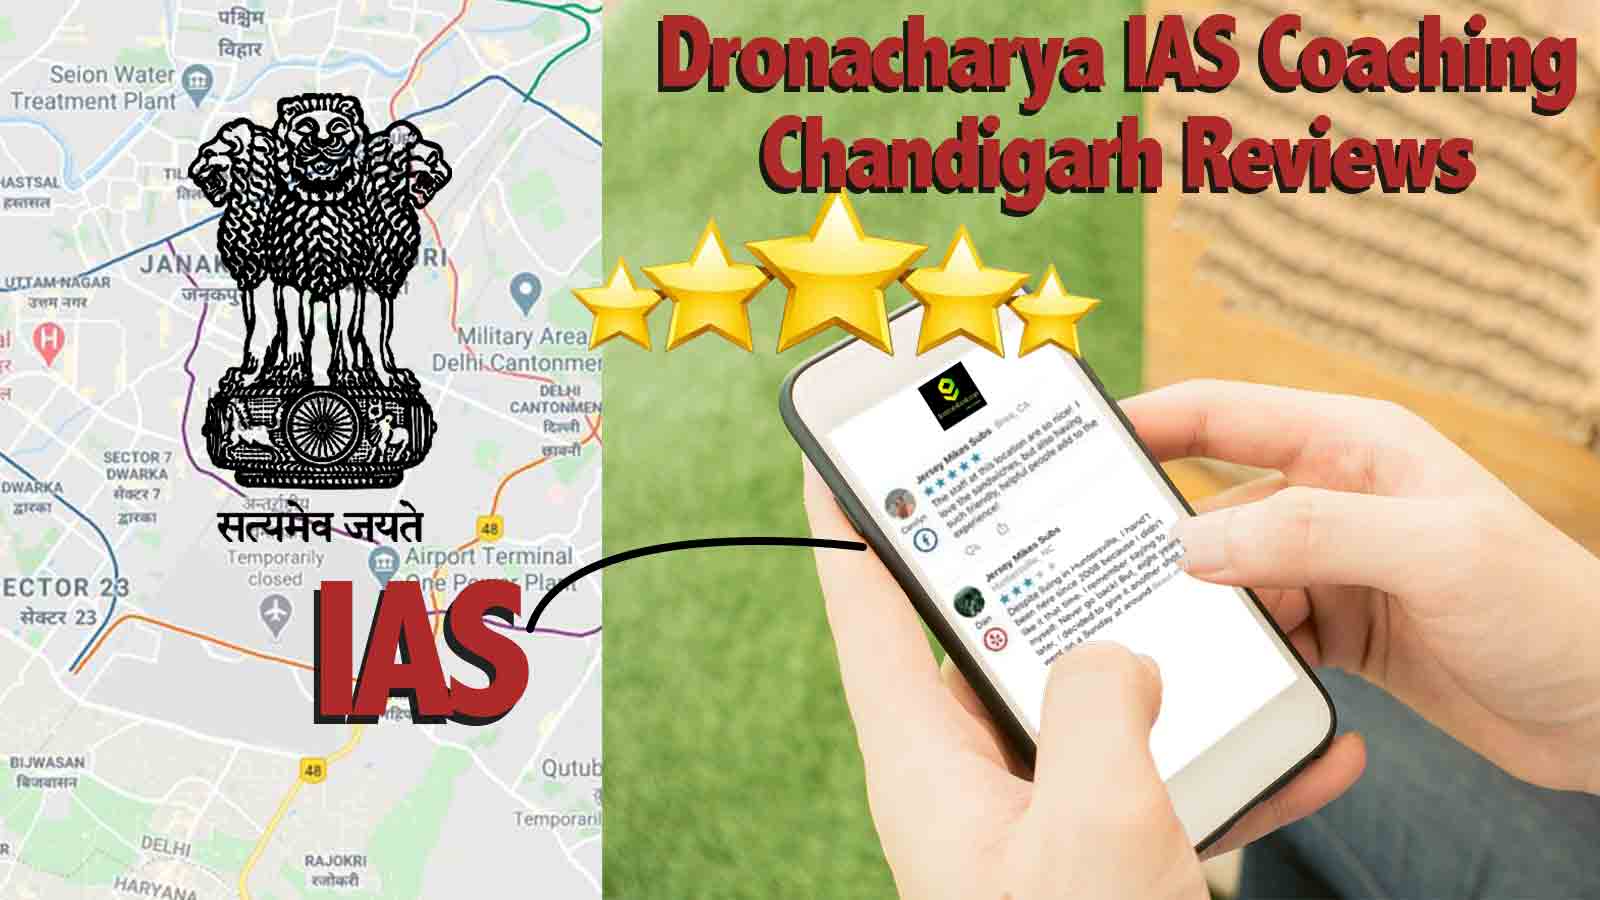 Dronacharya IAS Coaching Chandigarh Reviews